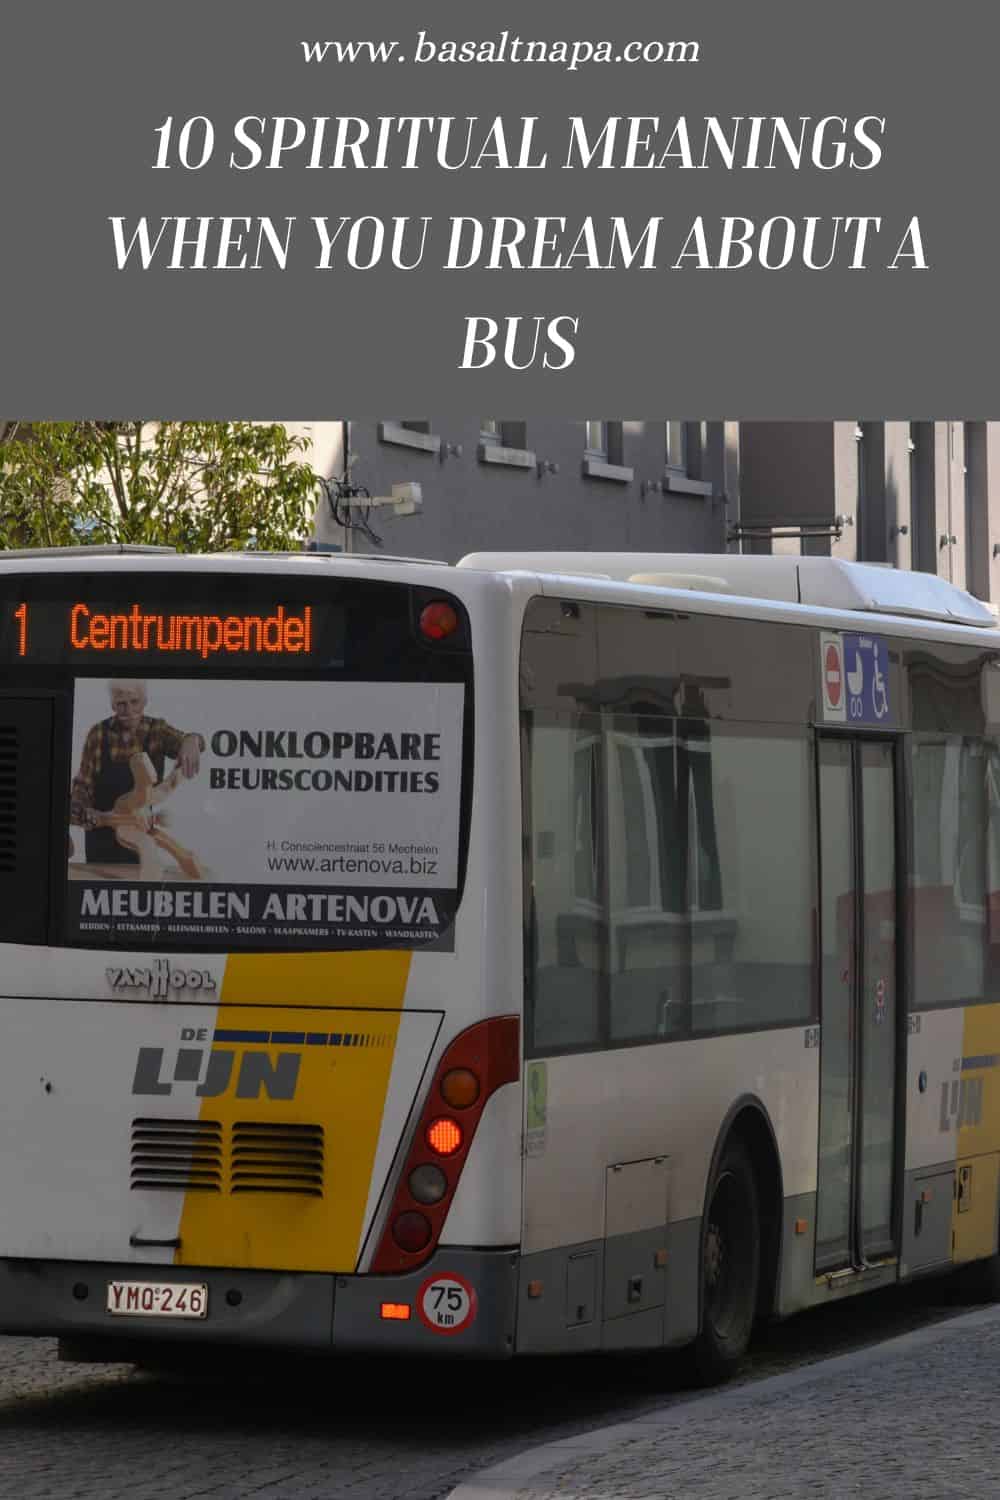  12 Bus Dream Interpretation